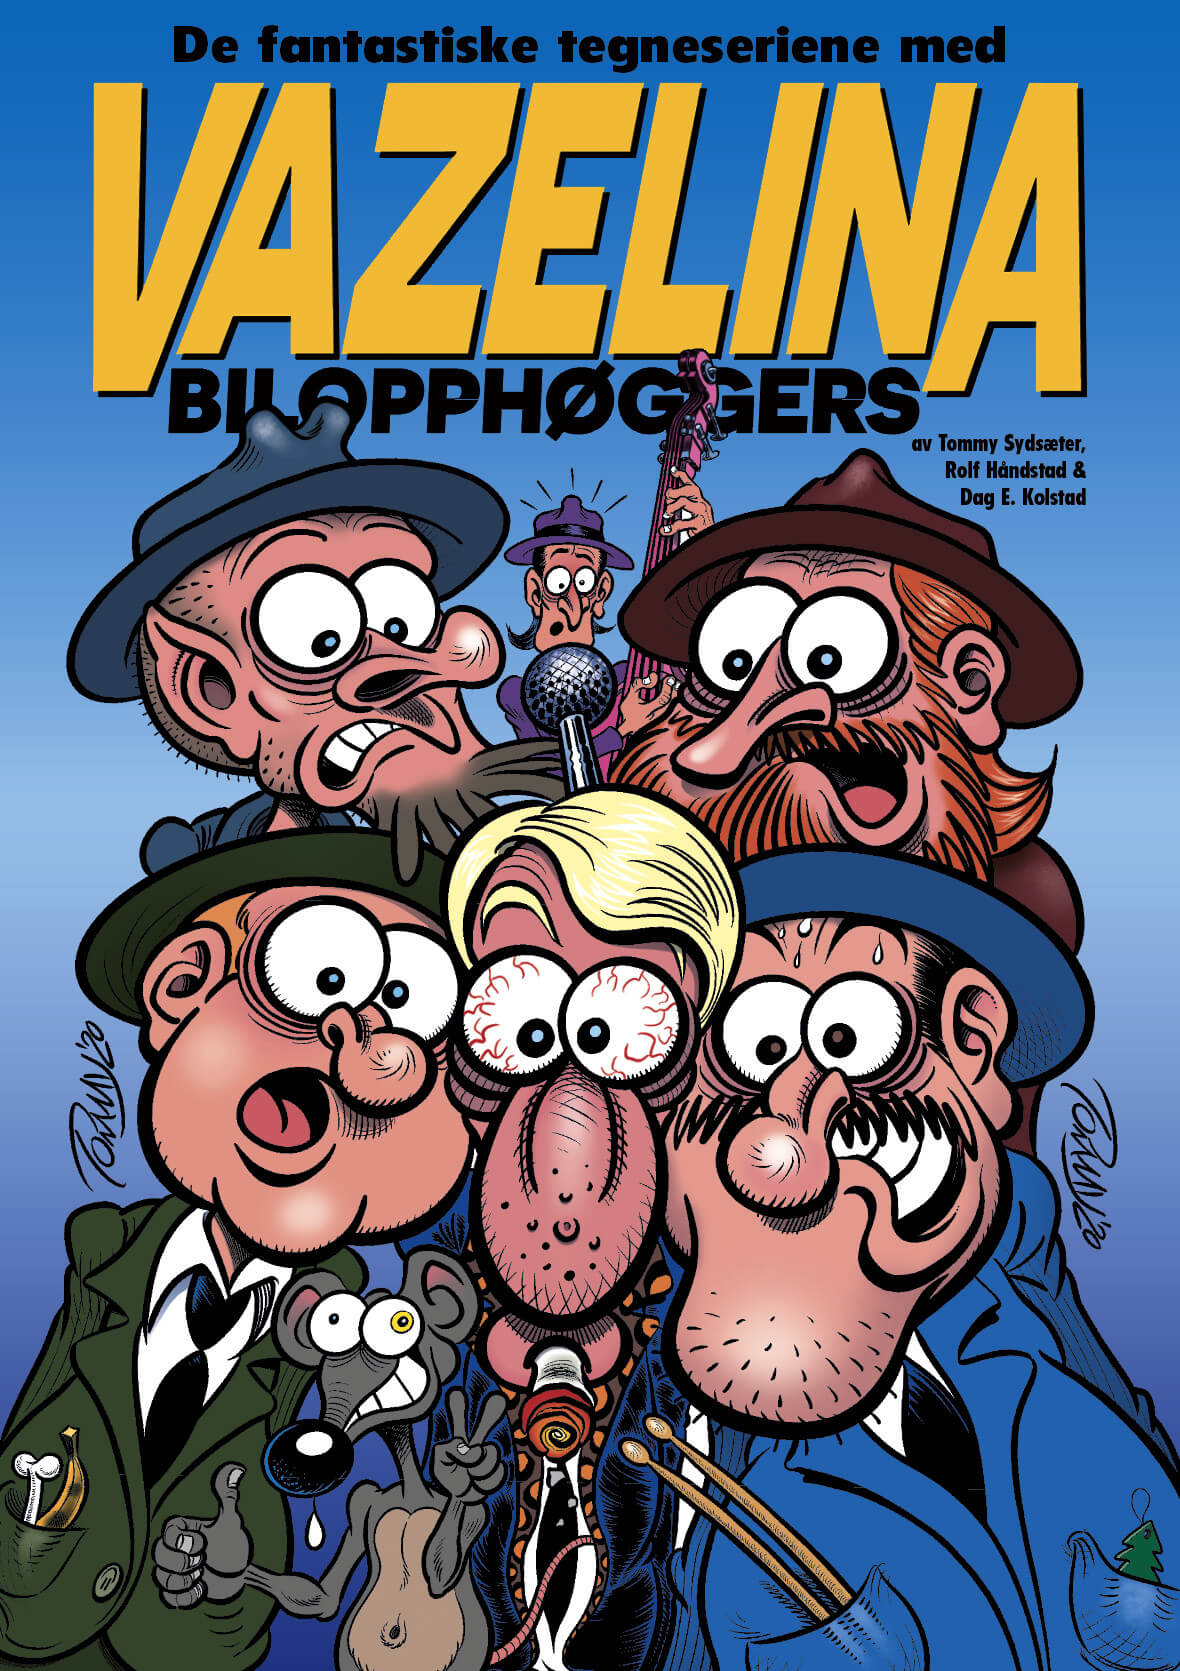 De fantastiske tegneseriene med Vazelina bilopphøggers vol. 2 omslag